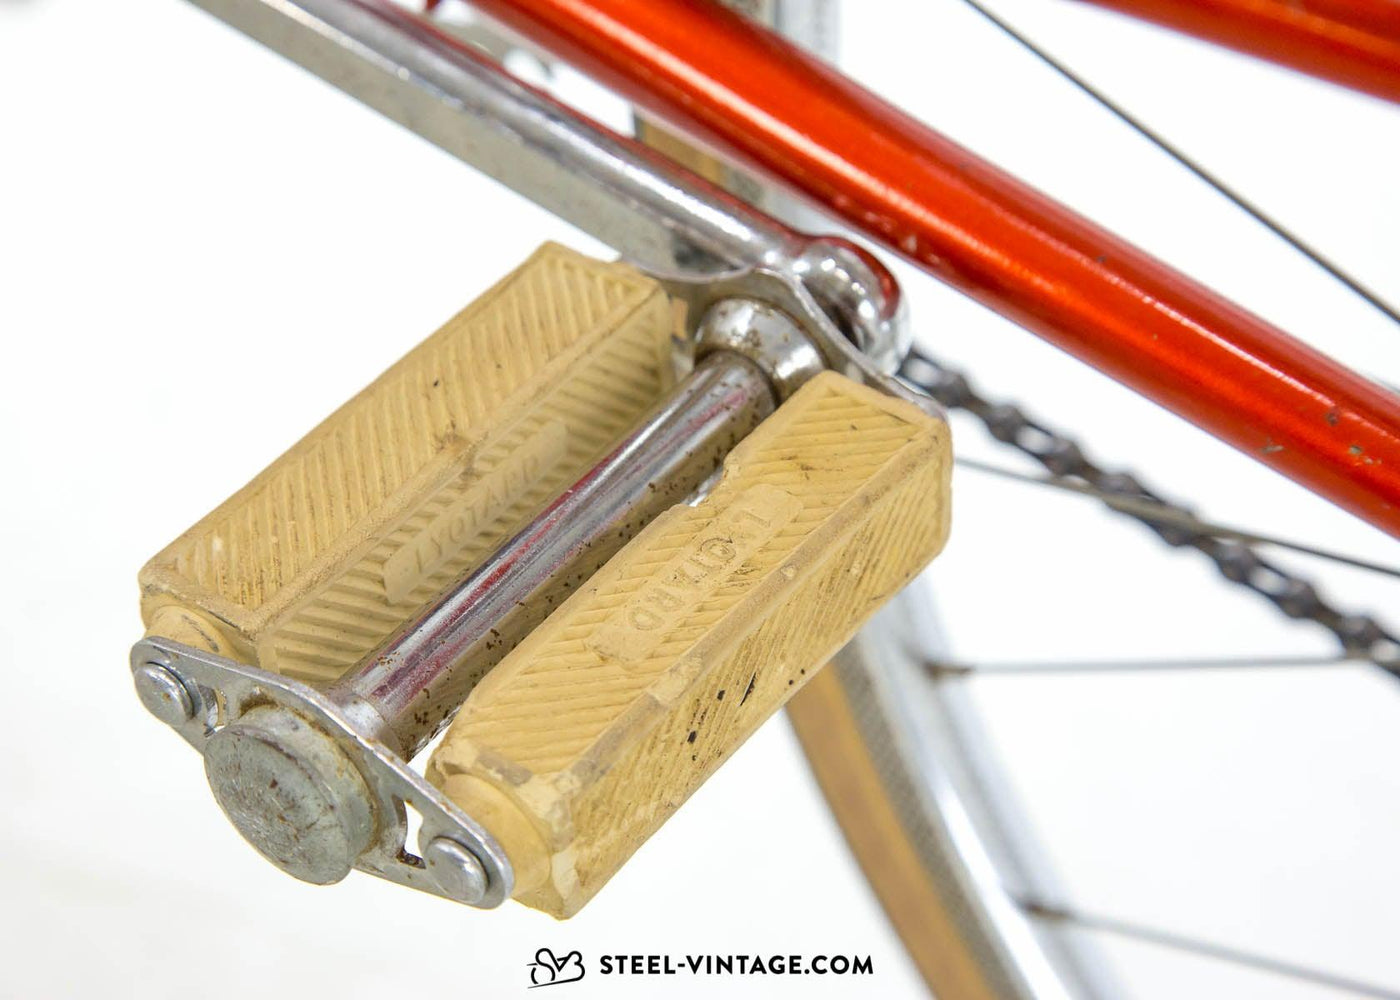 Gitane Evry Classic Mixte Orange Bike 1970s - Steel Vintage Bikes